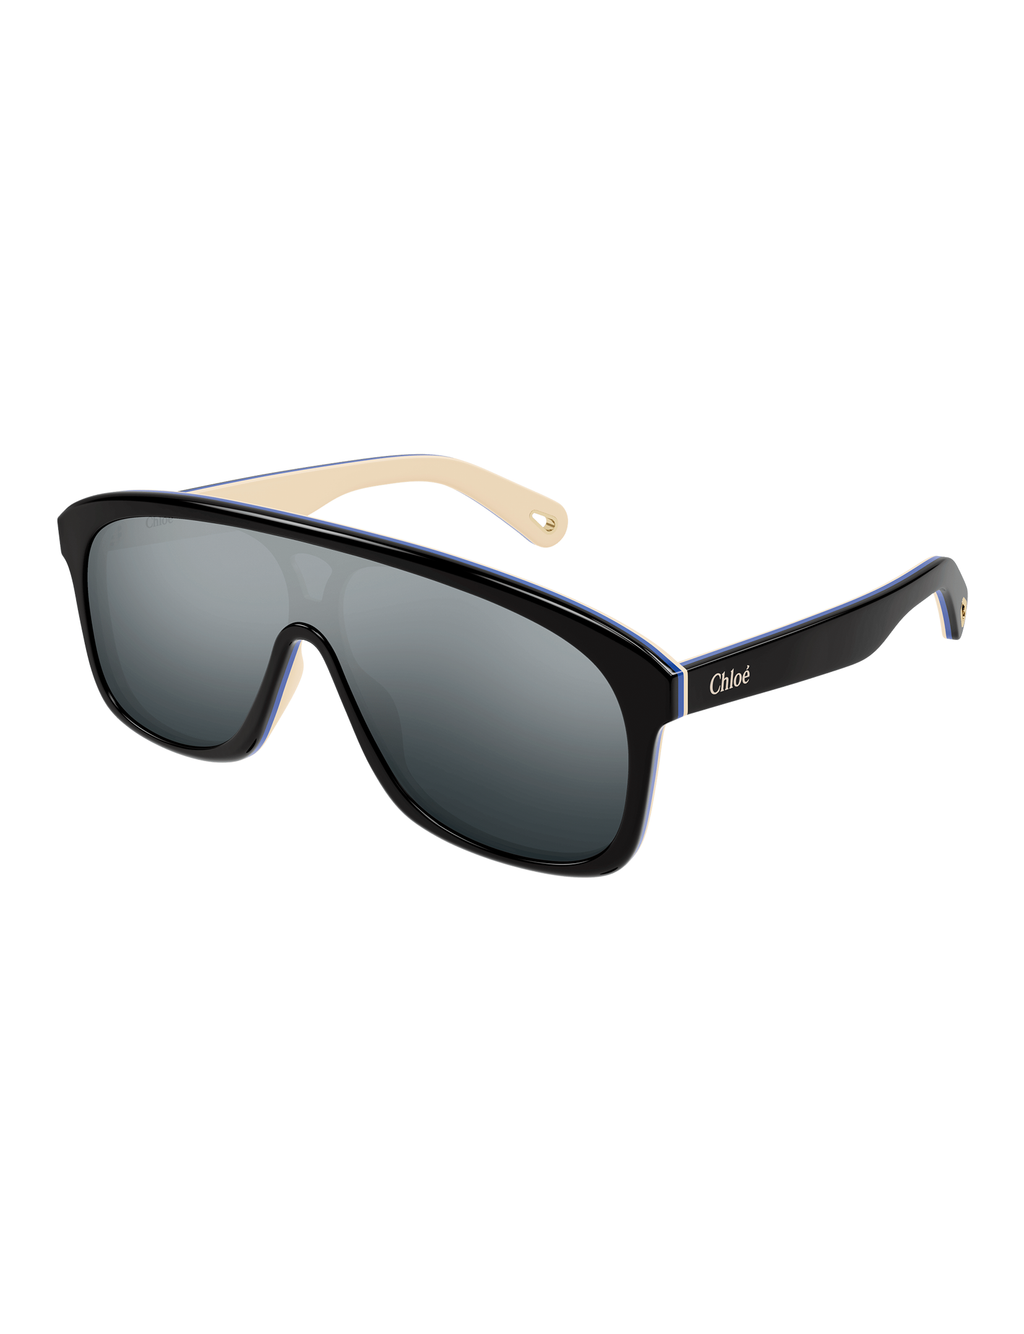 Pilot Sunglasses, Black/Silver